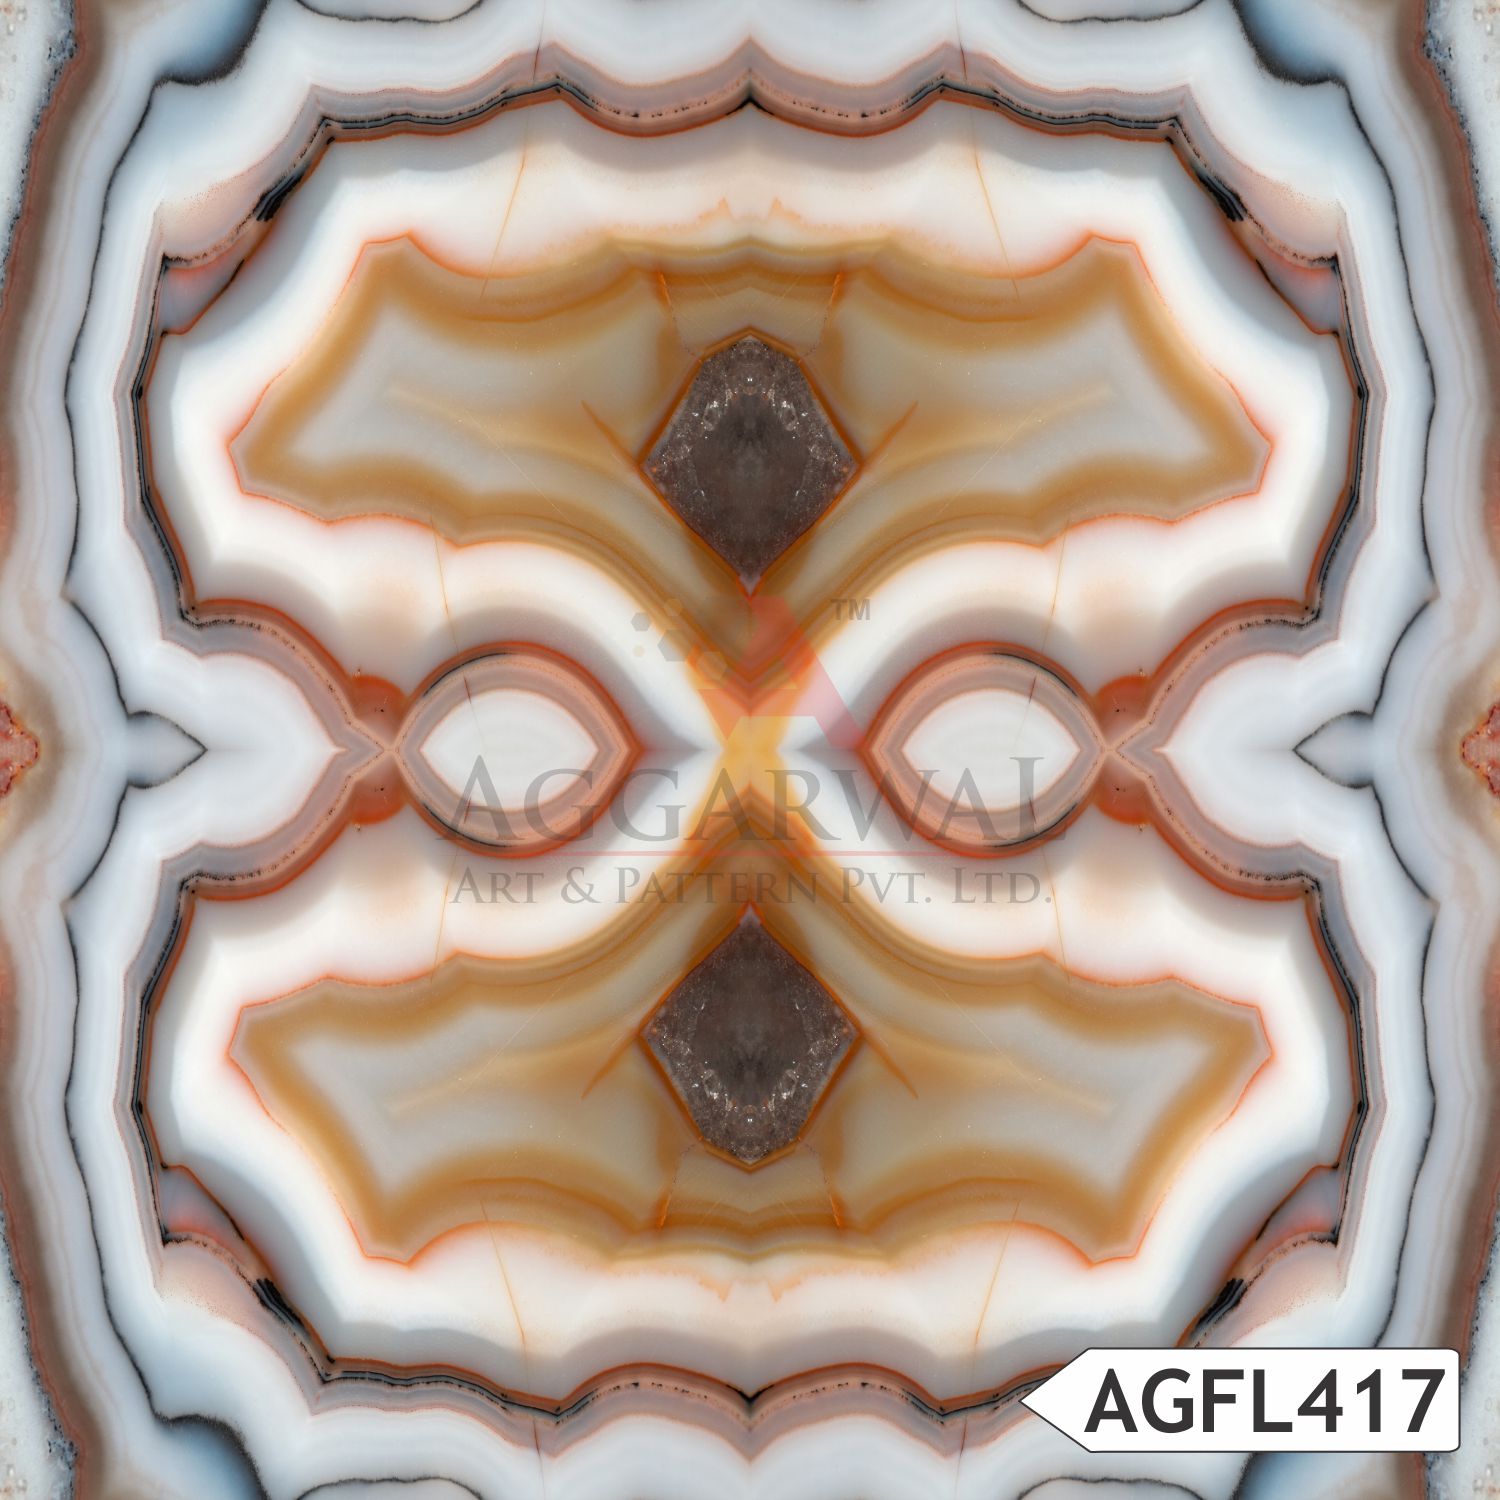 DESIGN CODE - AGFL417